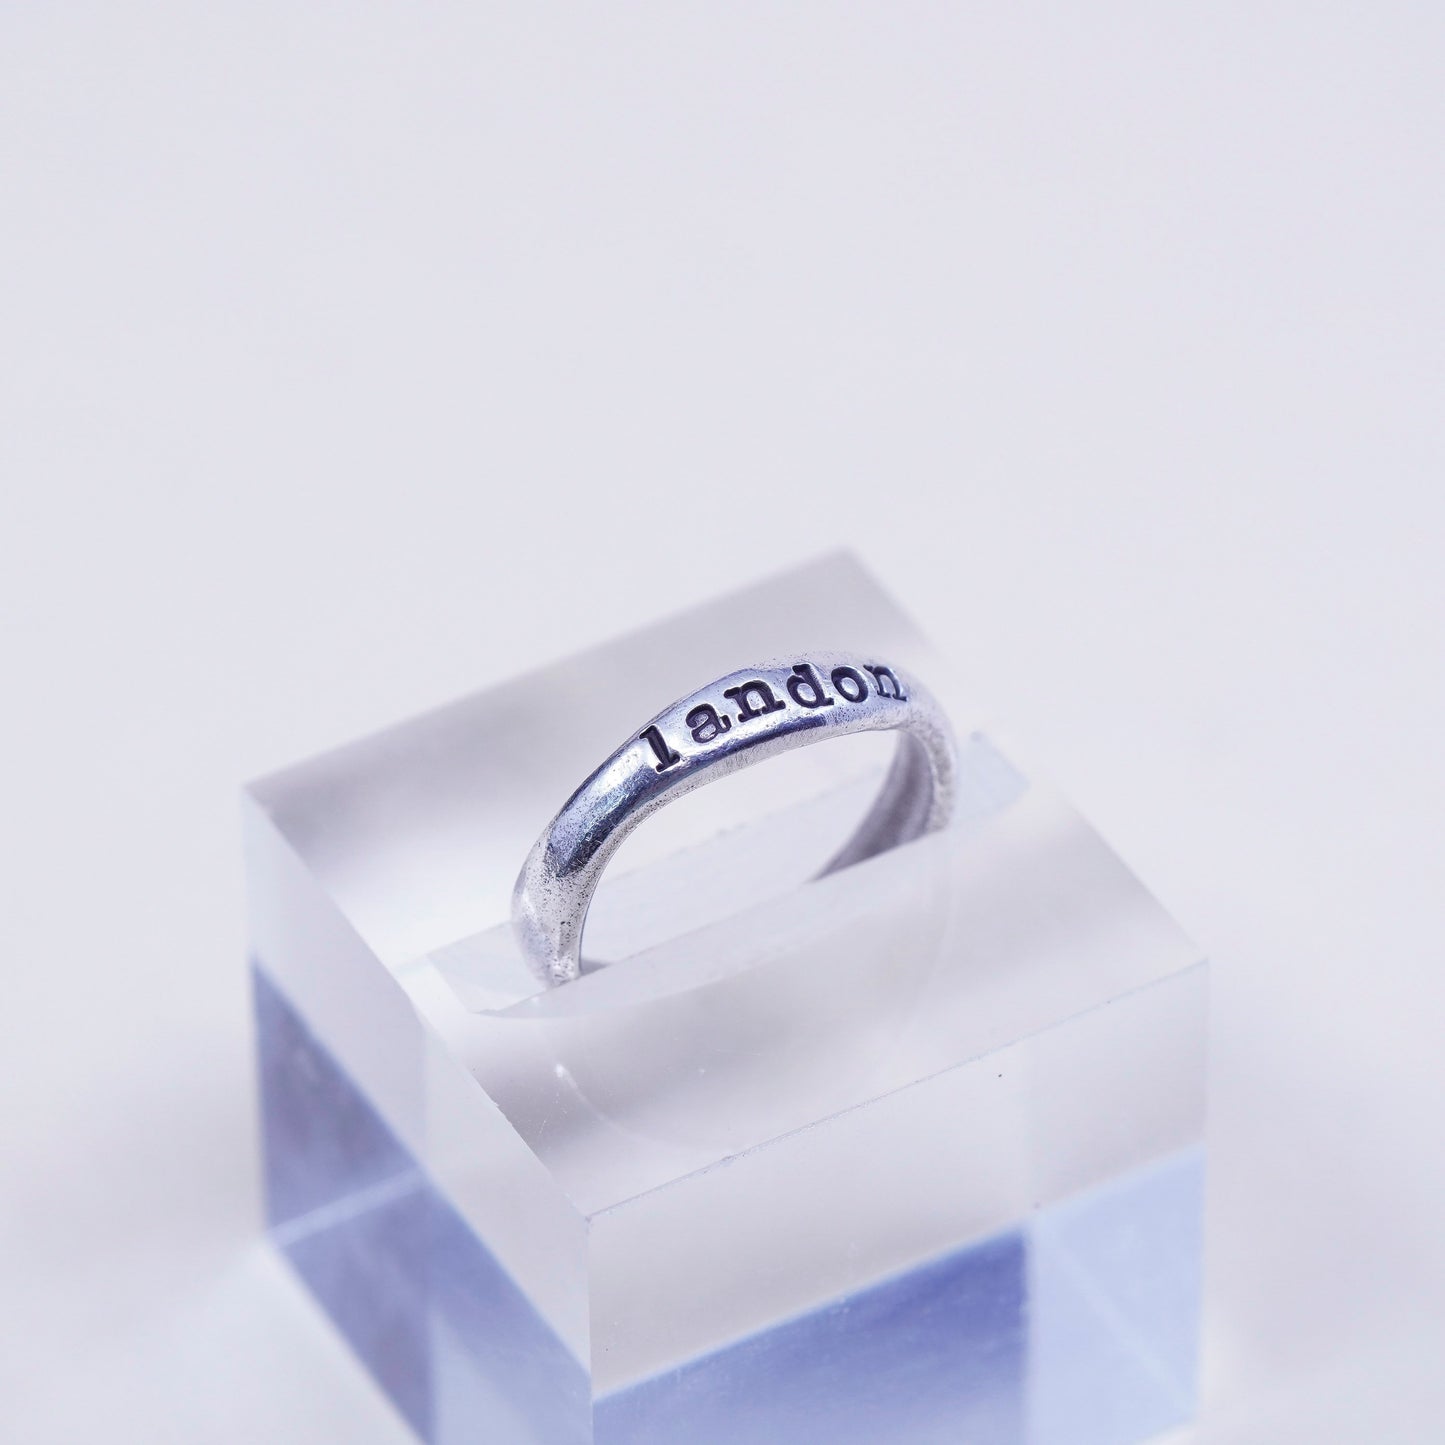 Size 6.5, Vintage sterling silver ring, 925 stackable band, engraved “Landon”